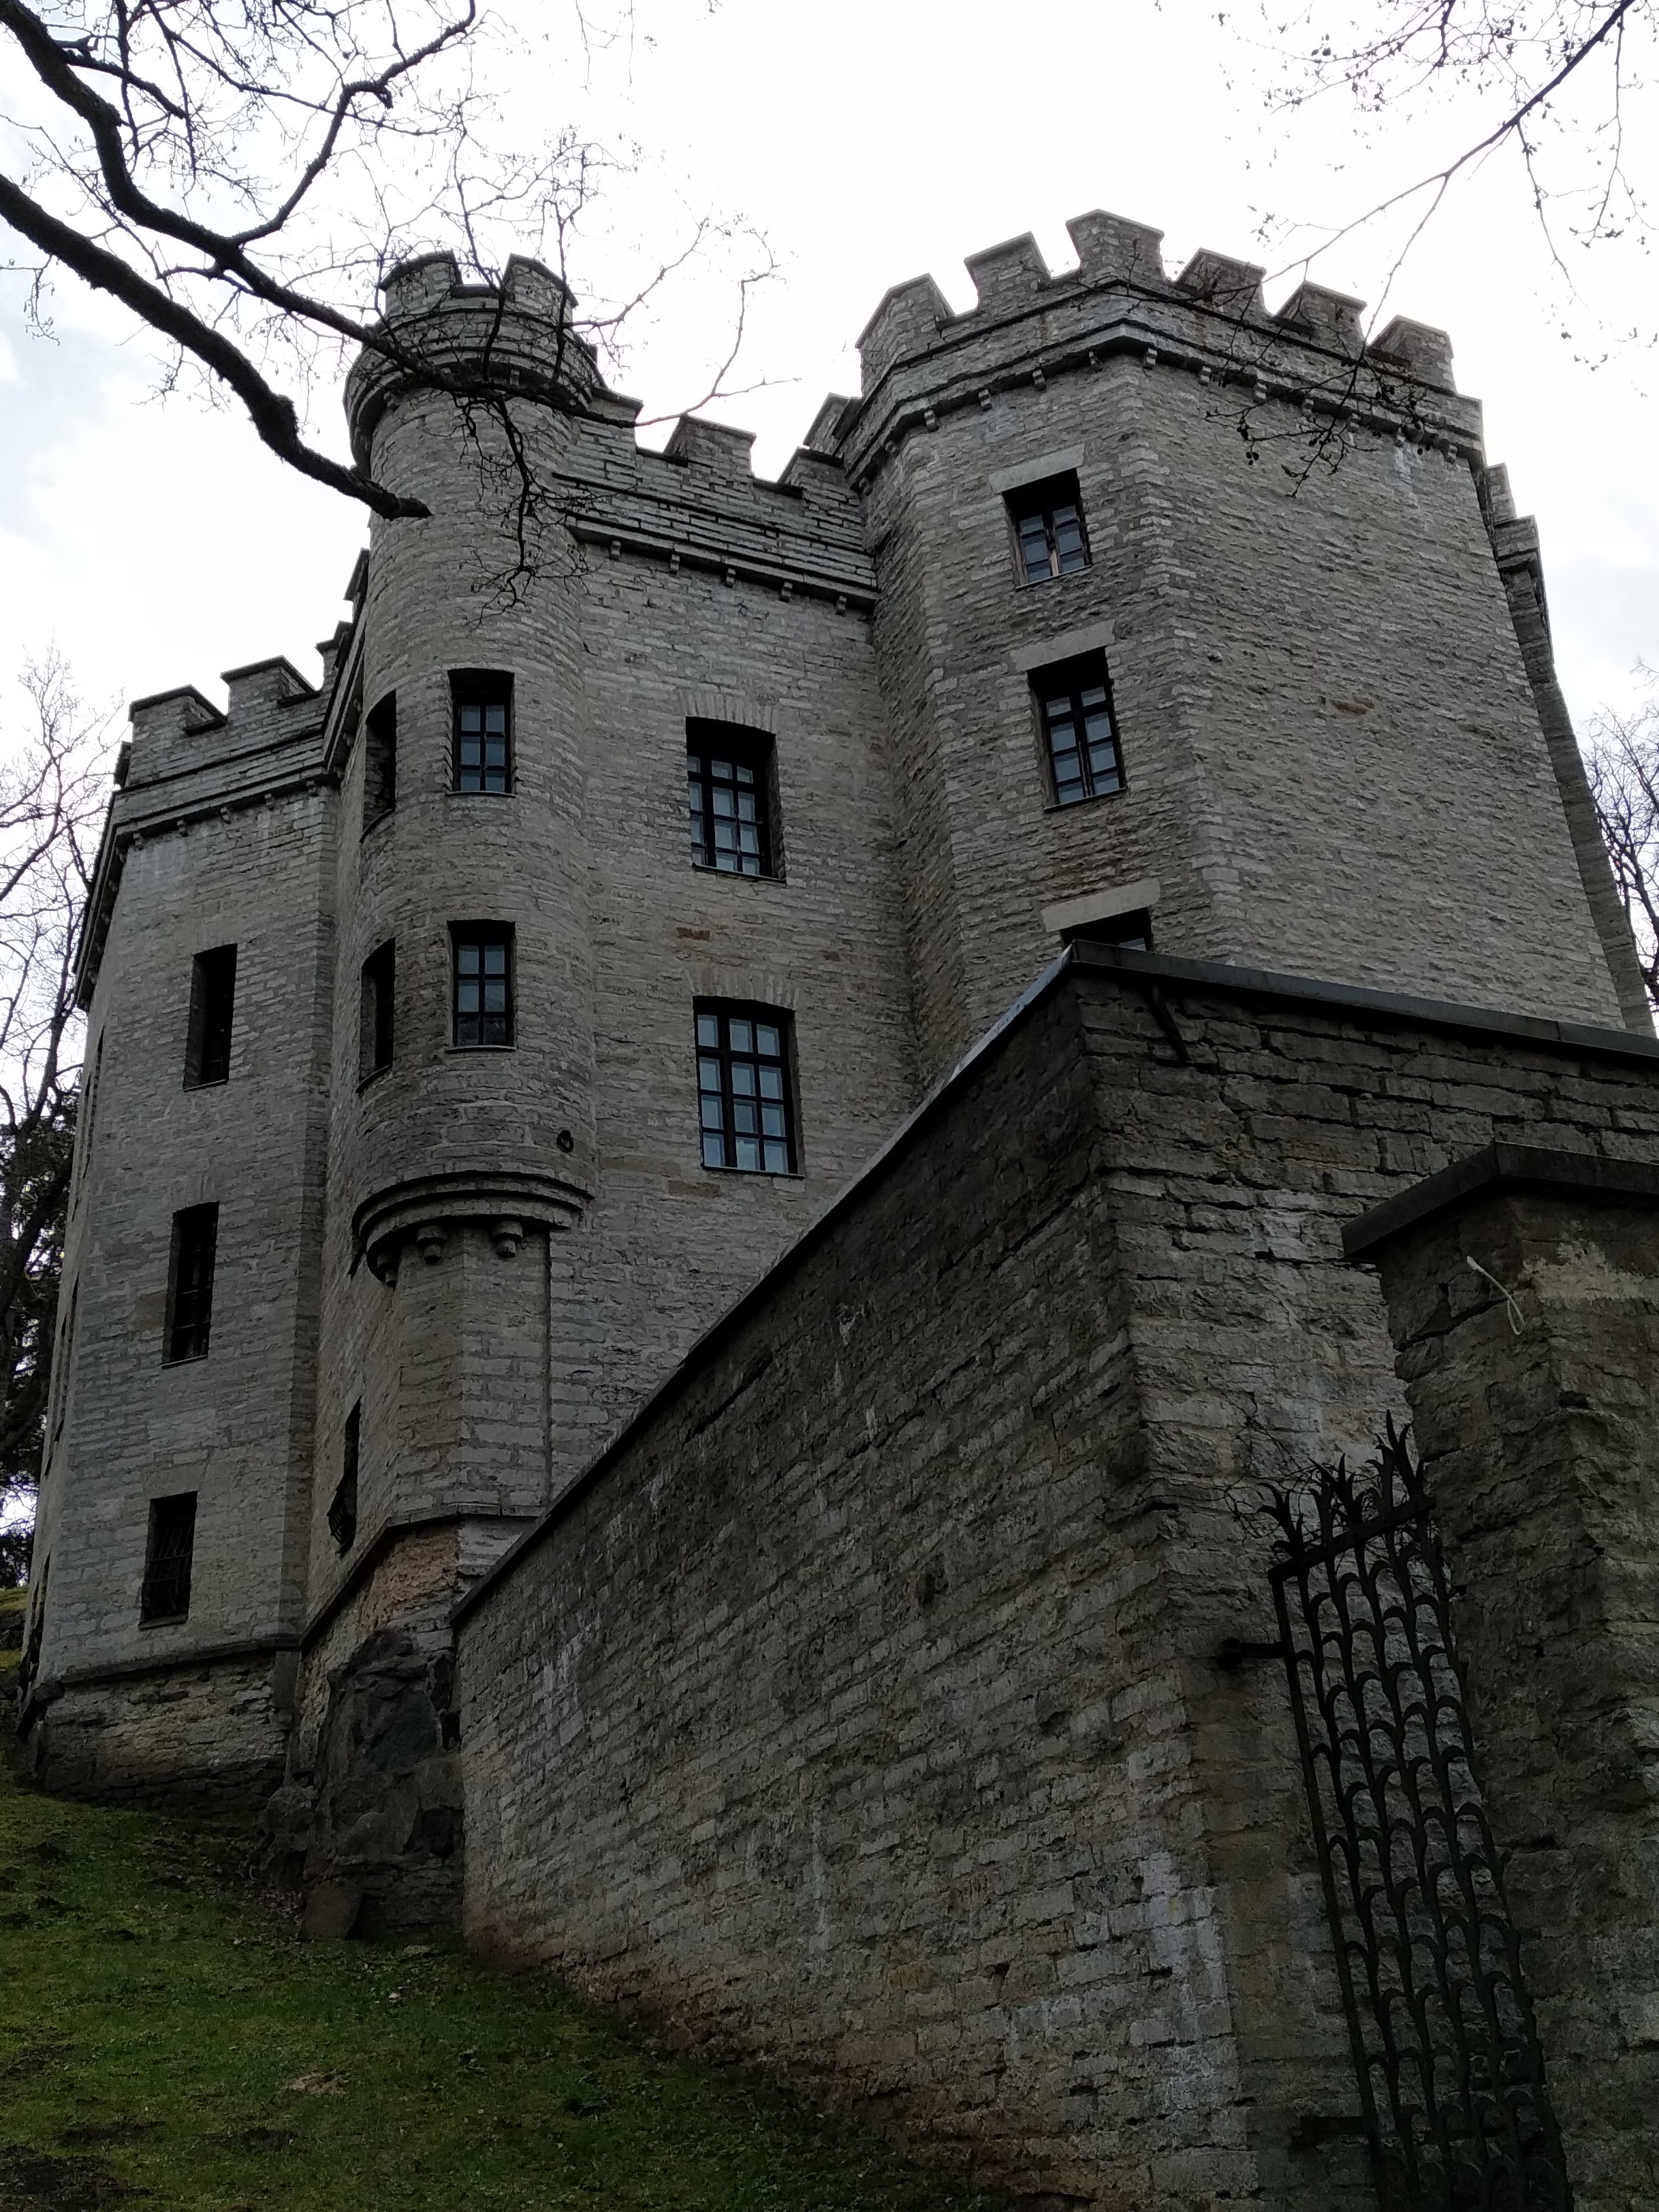 N. von Glehni loss, alt üles lähivaade lossile. Arhitekt Nikolai von Glehn rephoto